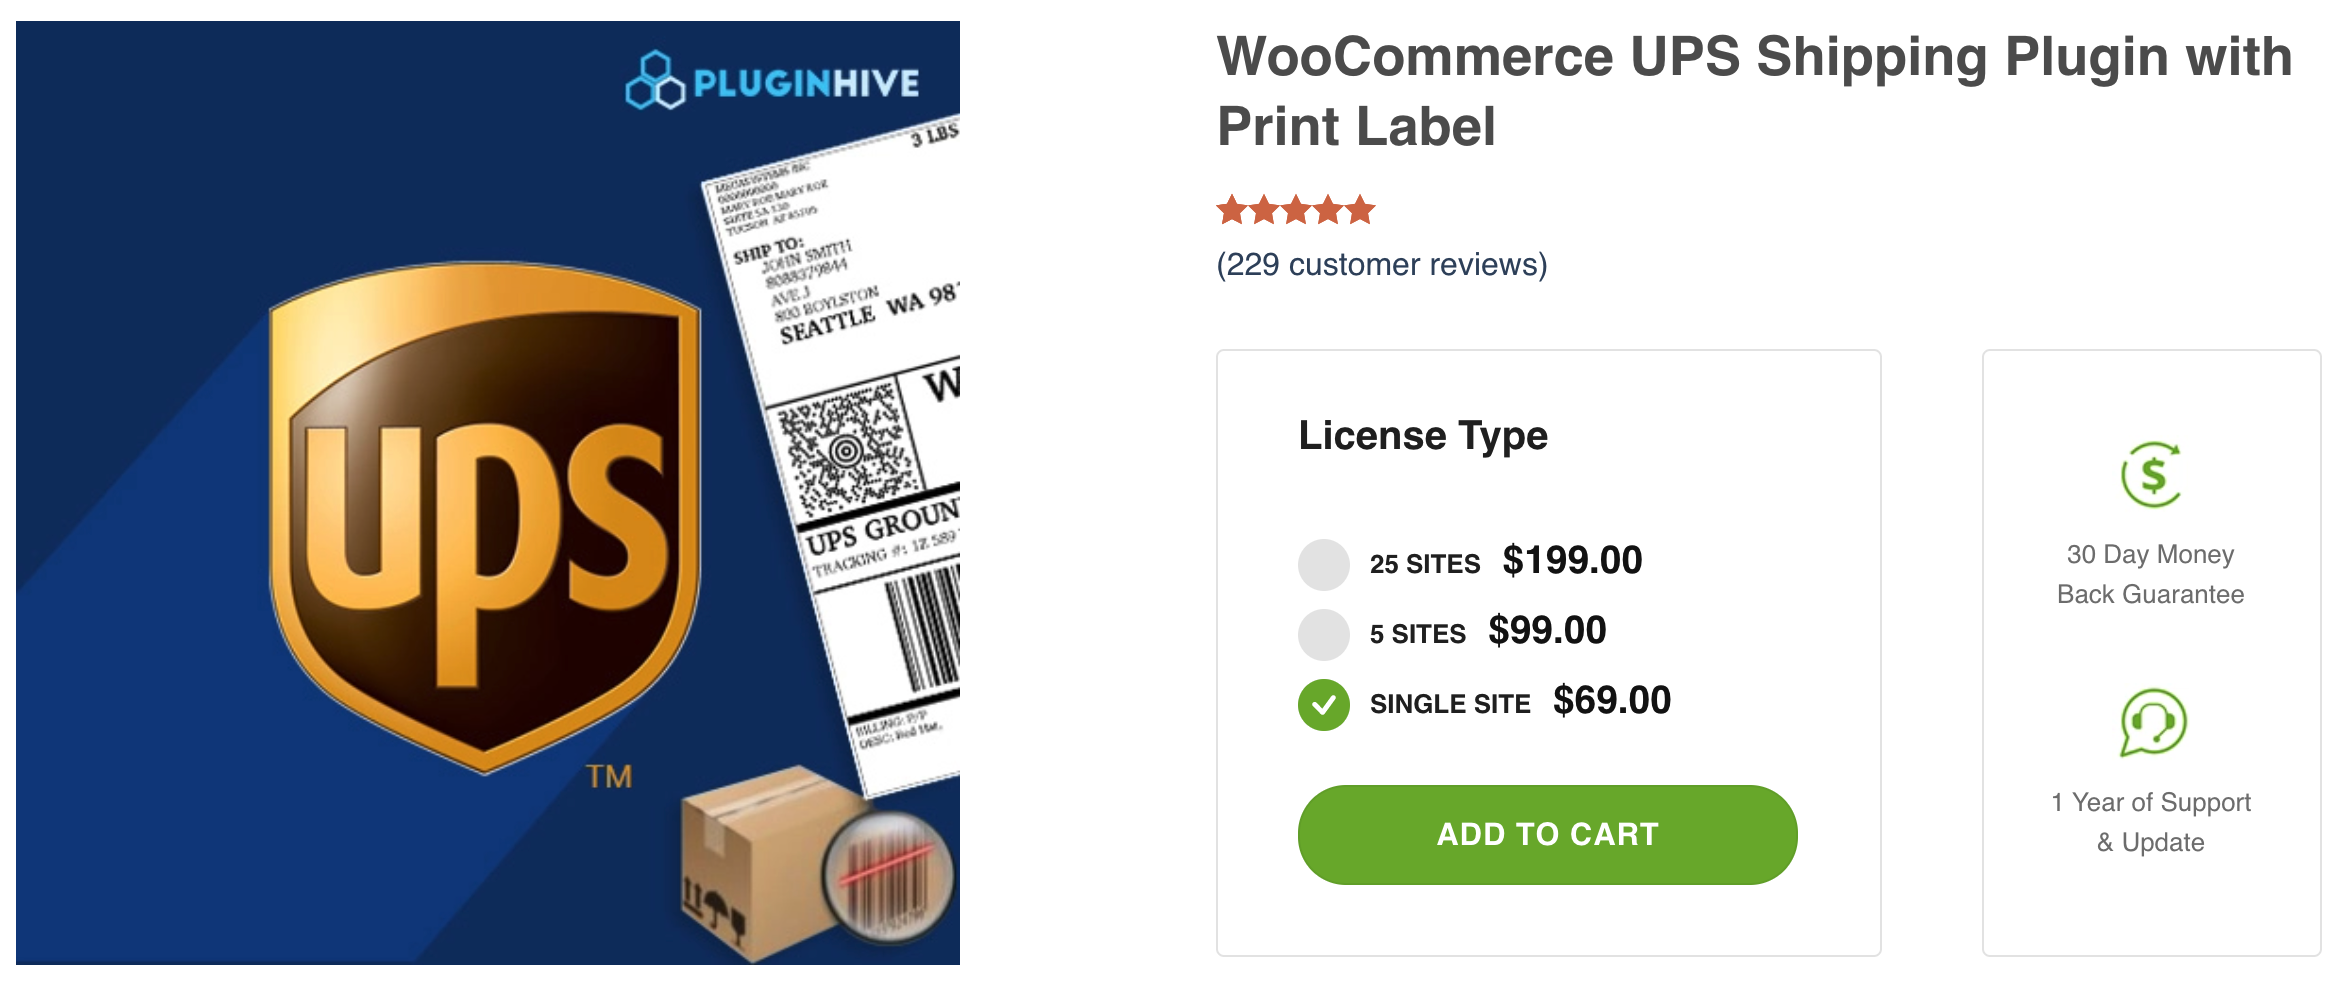 woocommerce ups shipping plugin